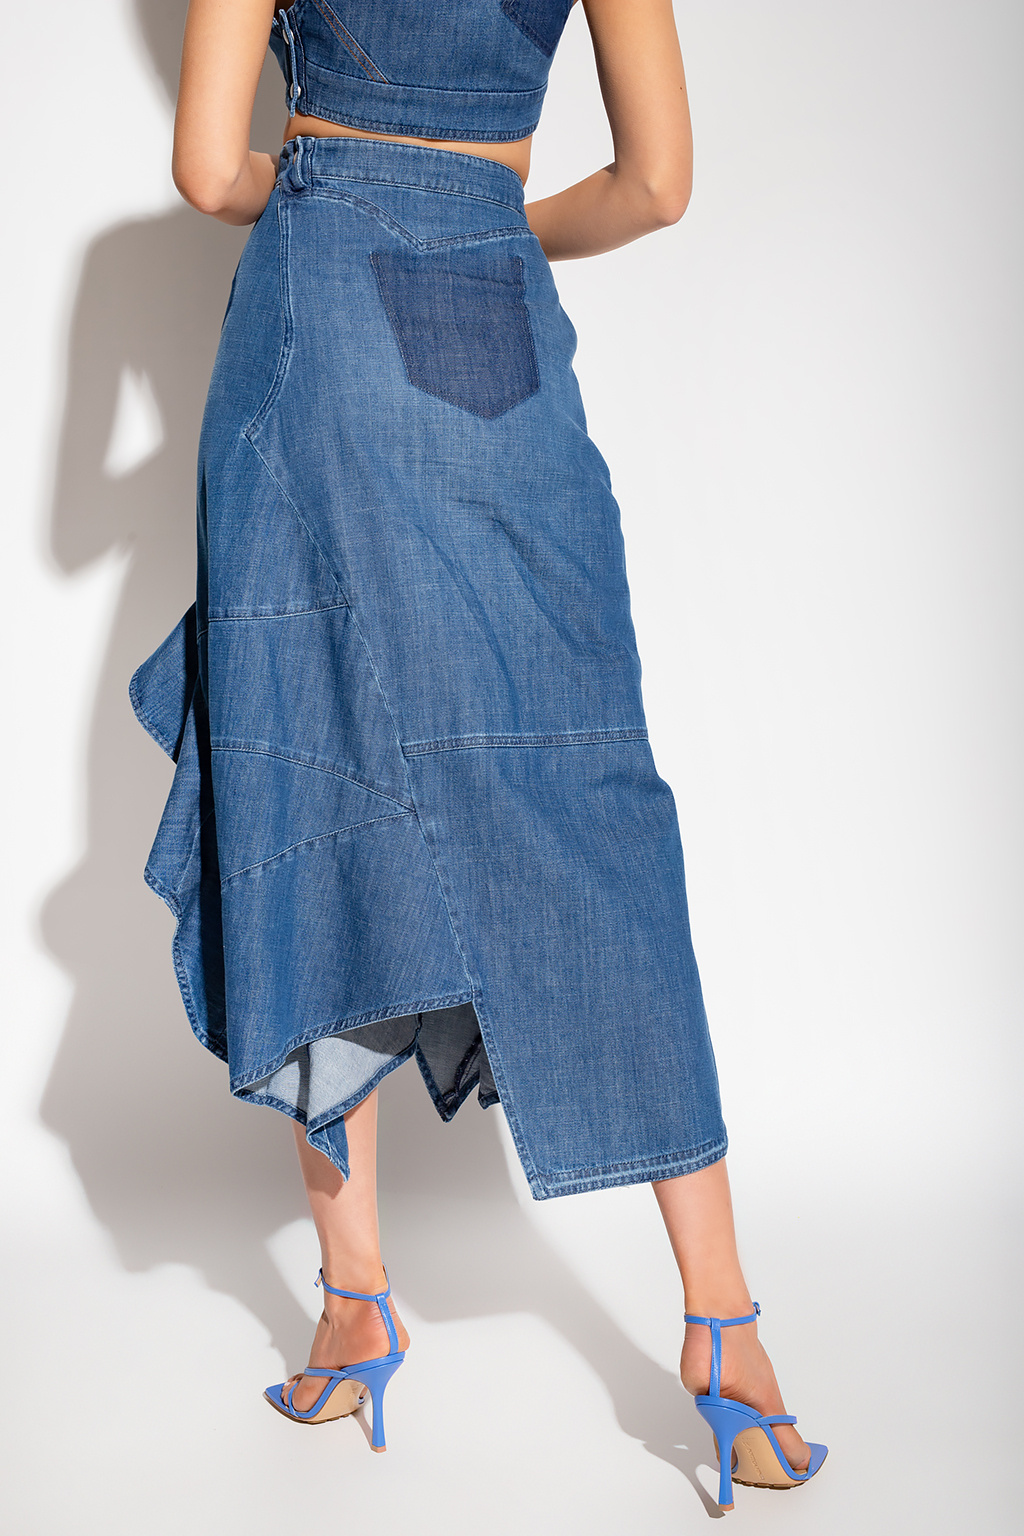 loewe blue Denim skirt